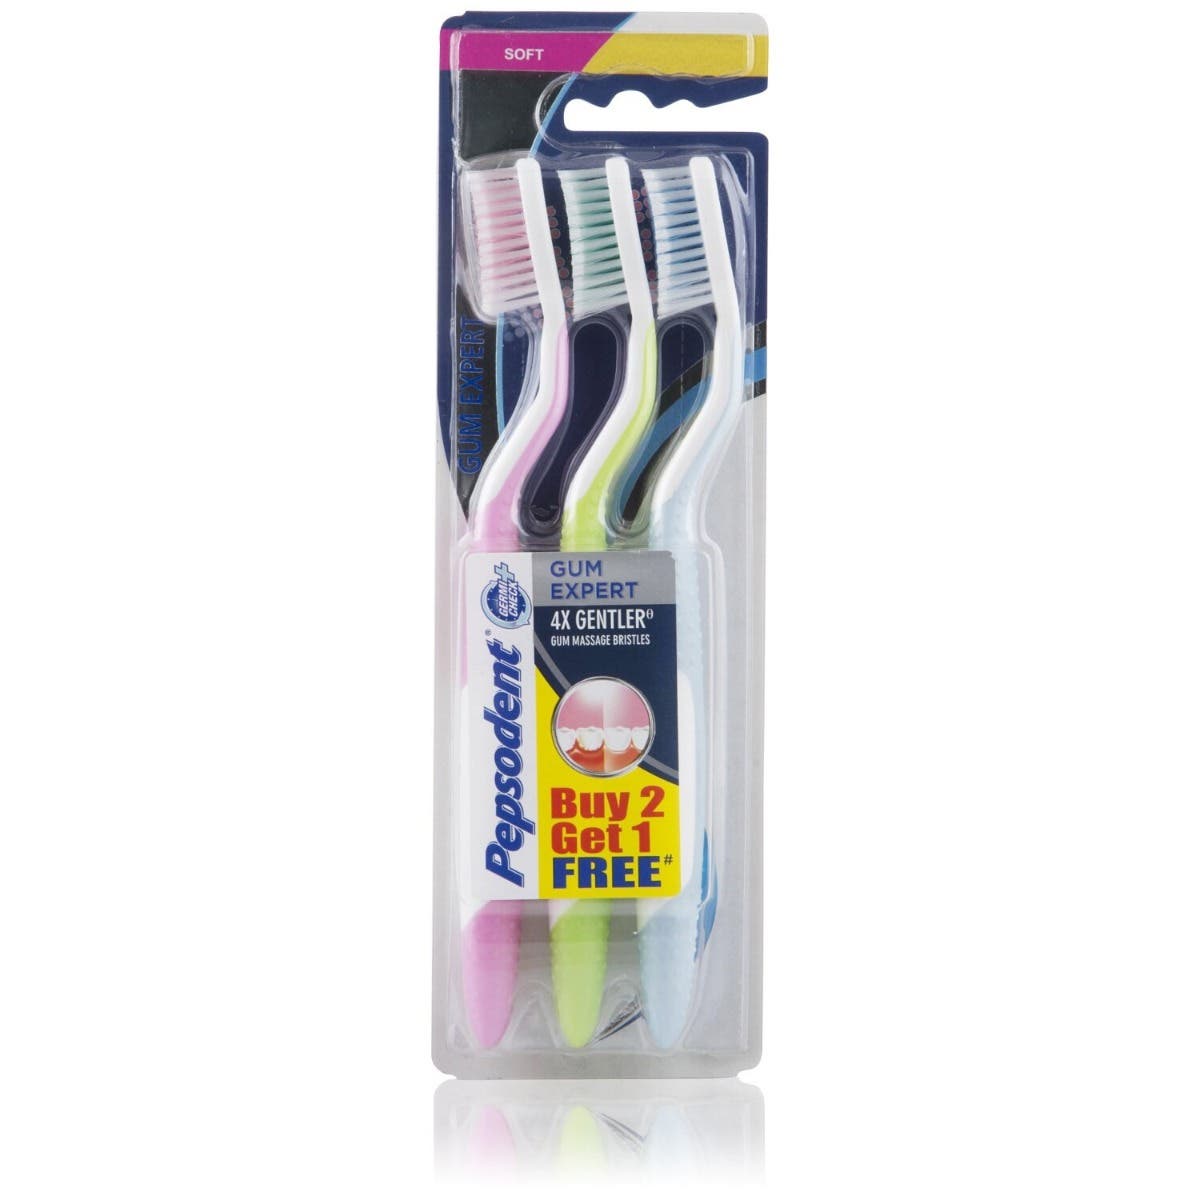 Pepsodent Gum Expert Toothbrush (Buy 2 Get 1 Free) 3 Pcs